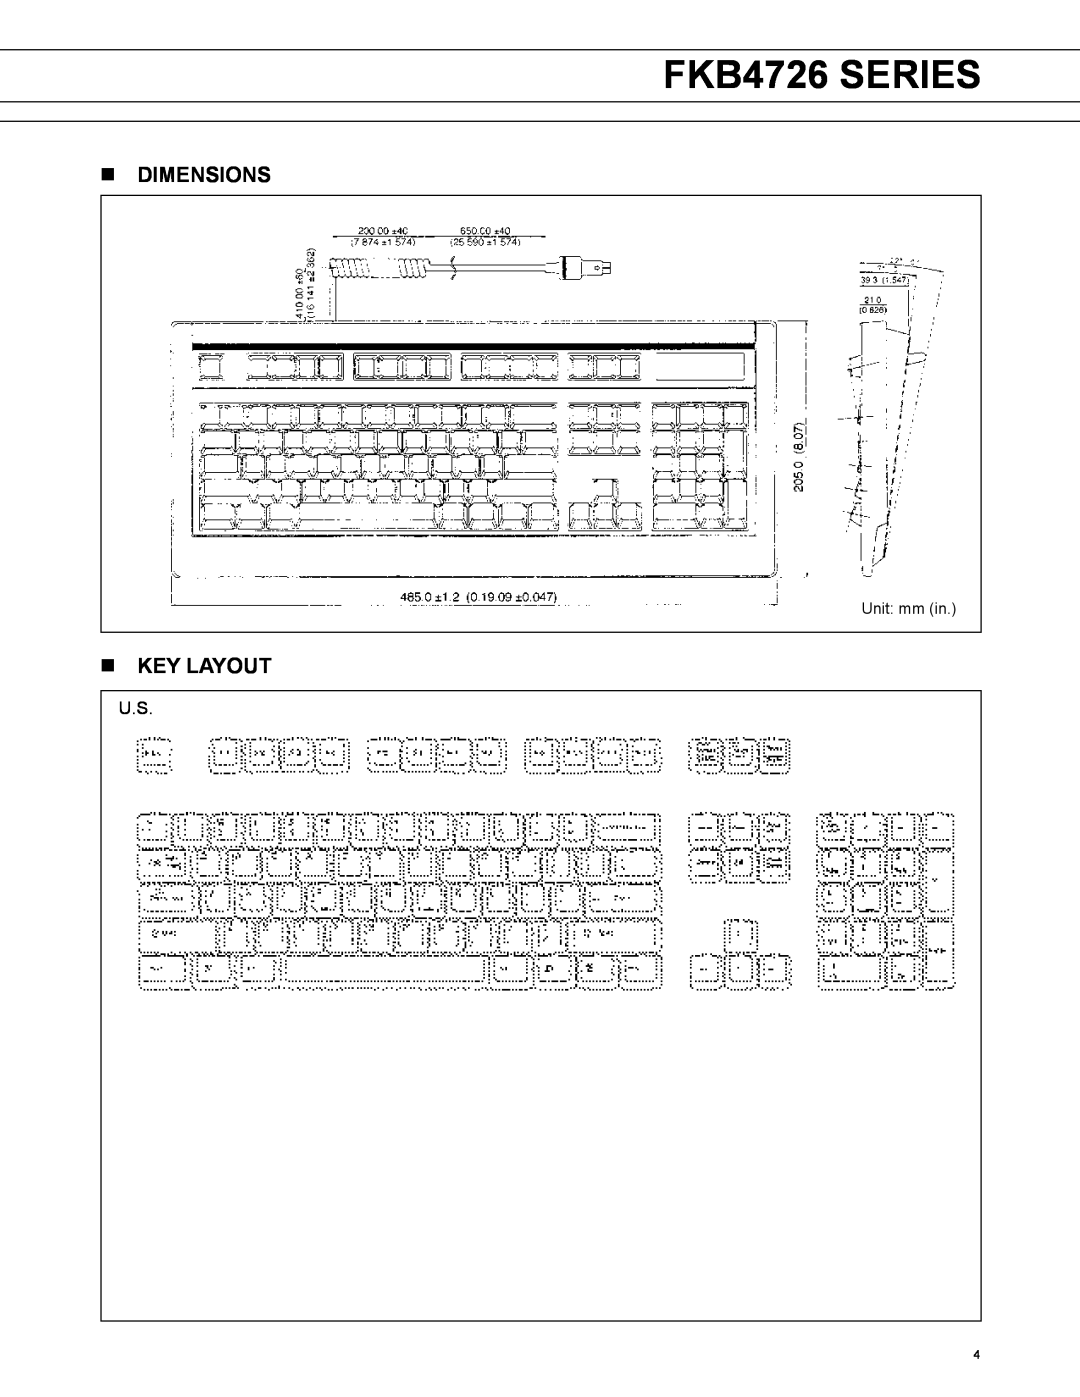 Fujitsu FKB4726 SERIES manual n DIMENSIONS, n KEY LAYOUT 